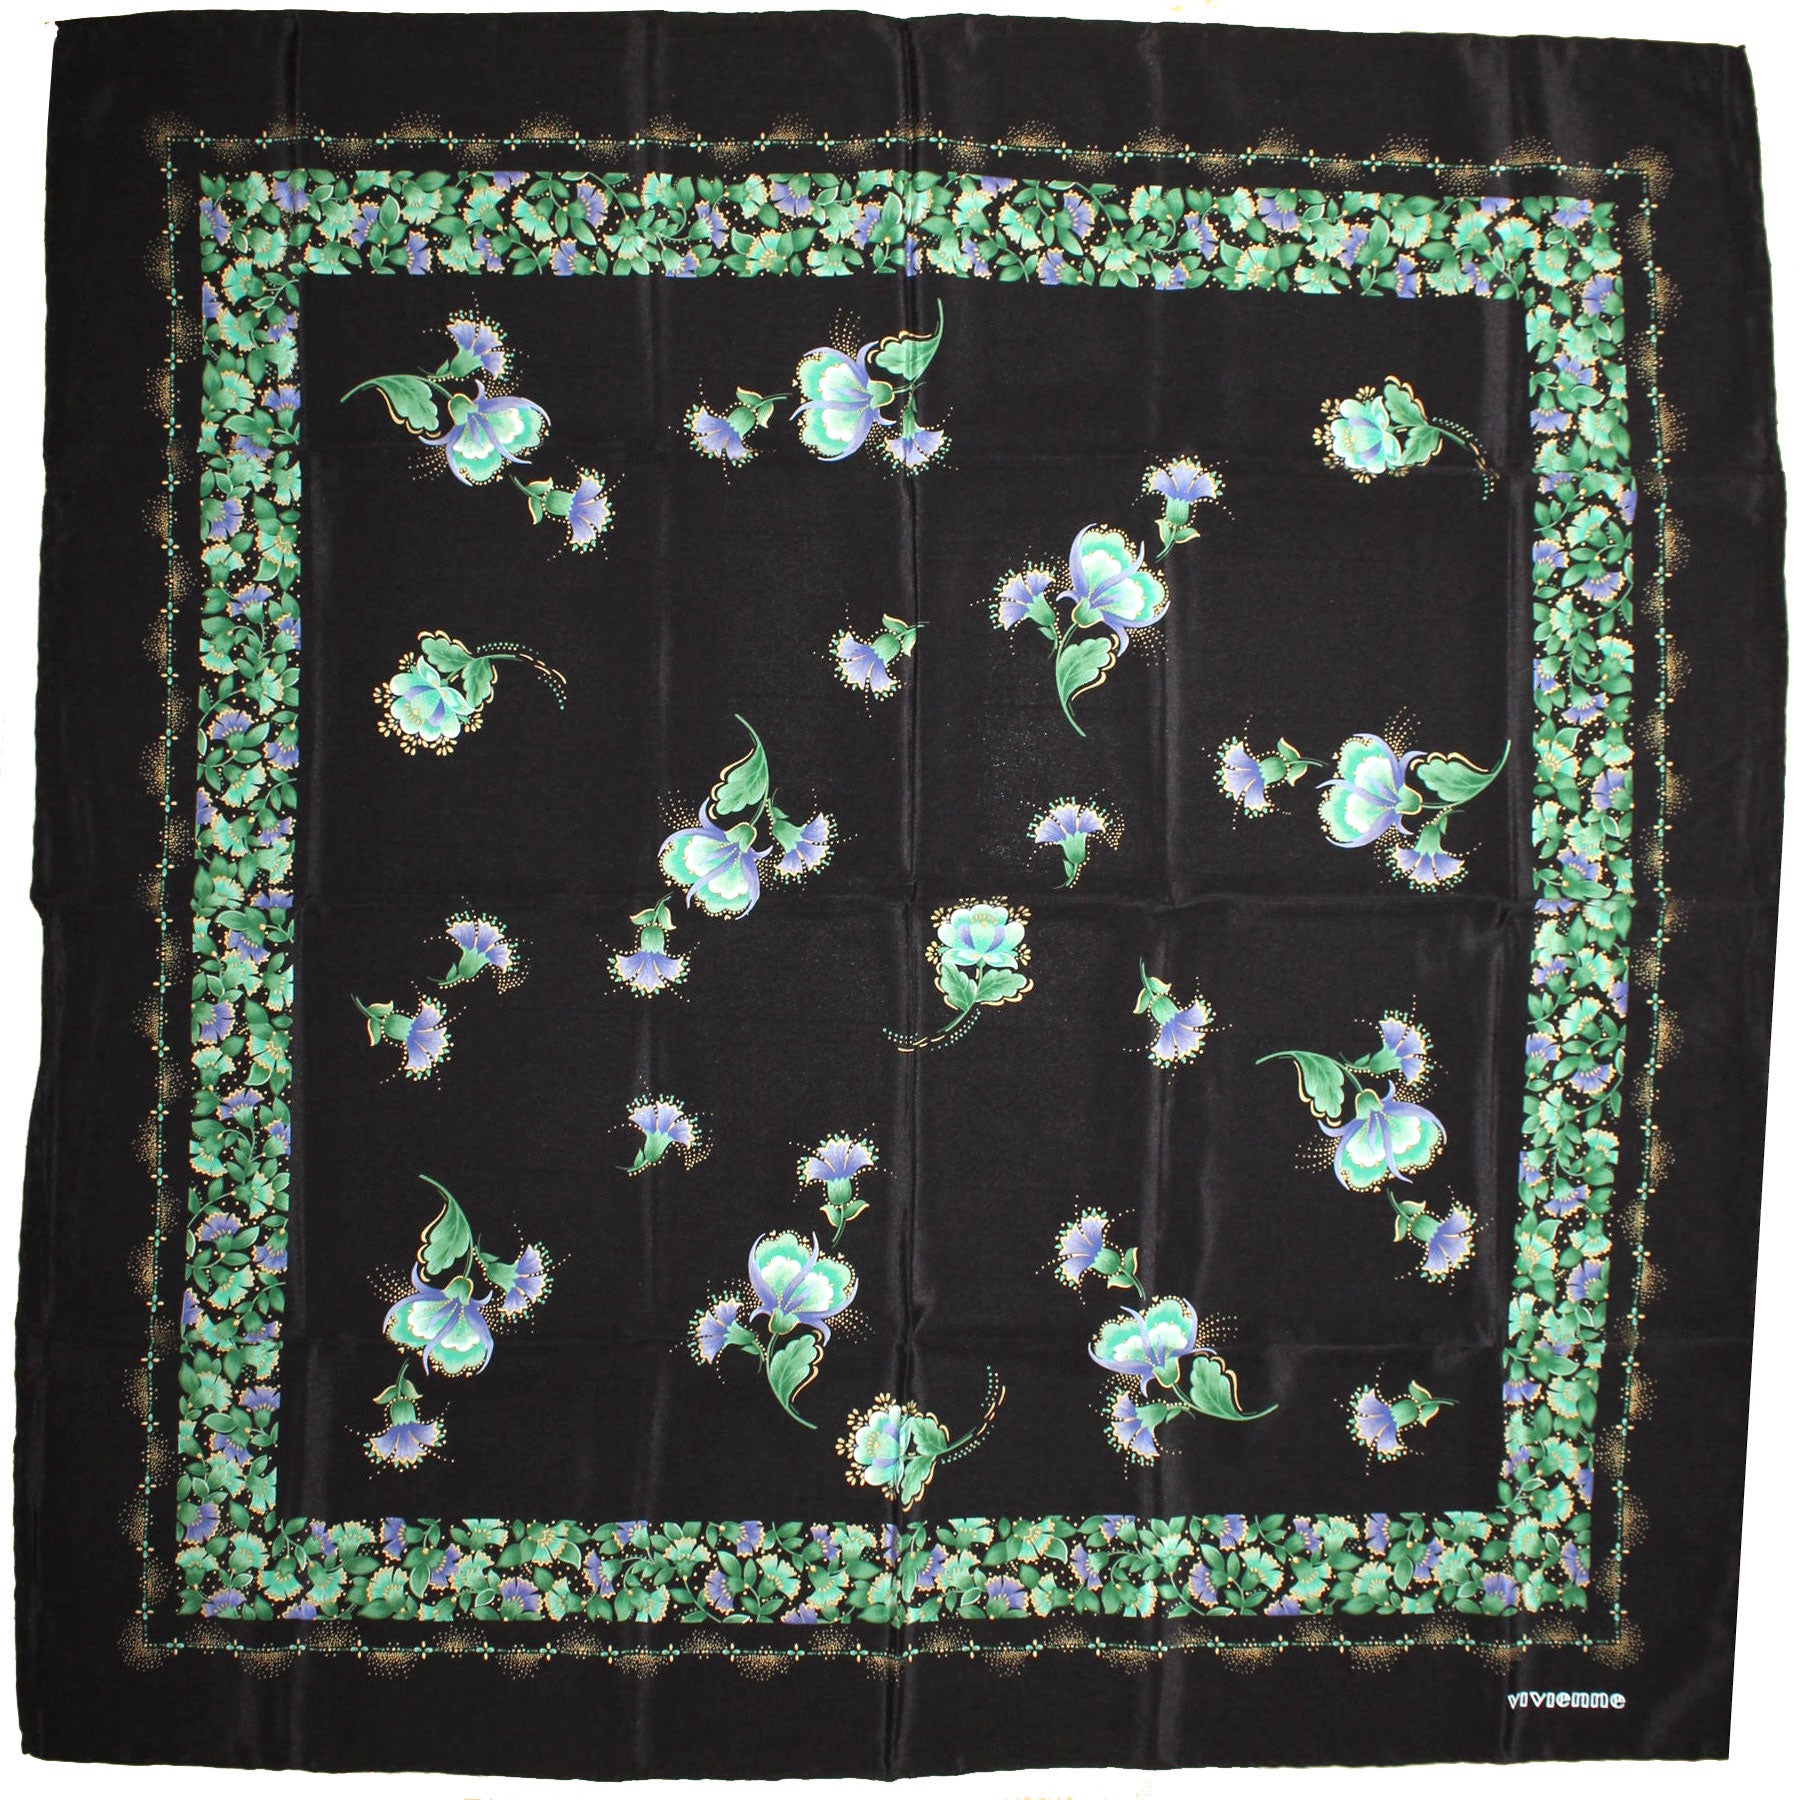 Vivienne Silk Scarf Black Green Purple Floral Design - Large 35 Inch Square Scarf SALE